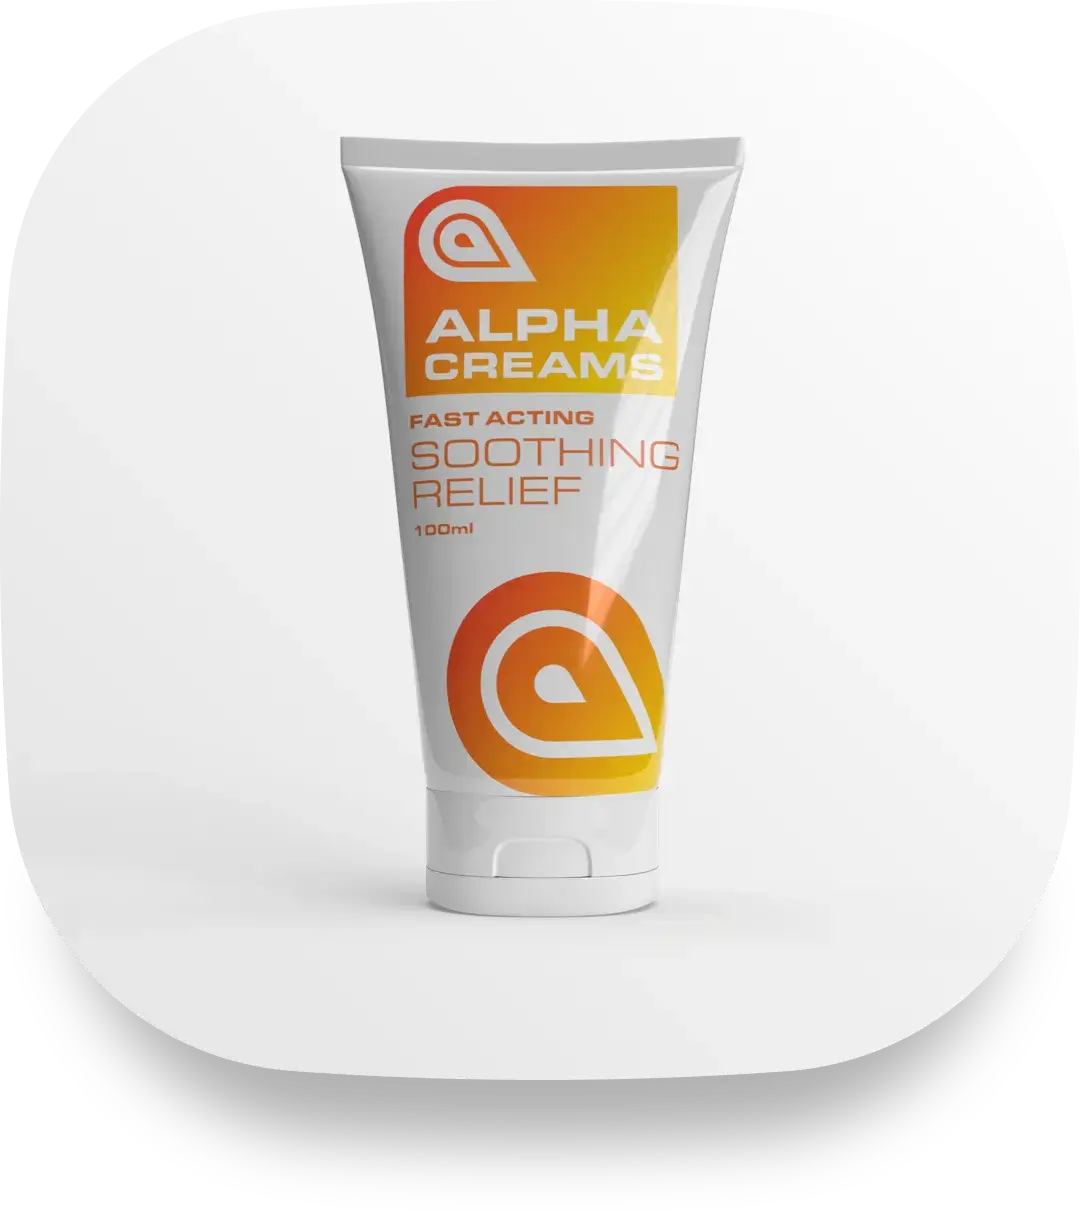 Alpha Cream Products